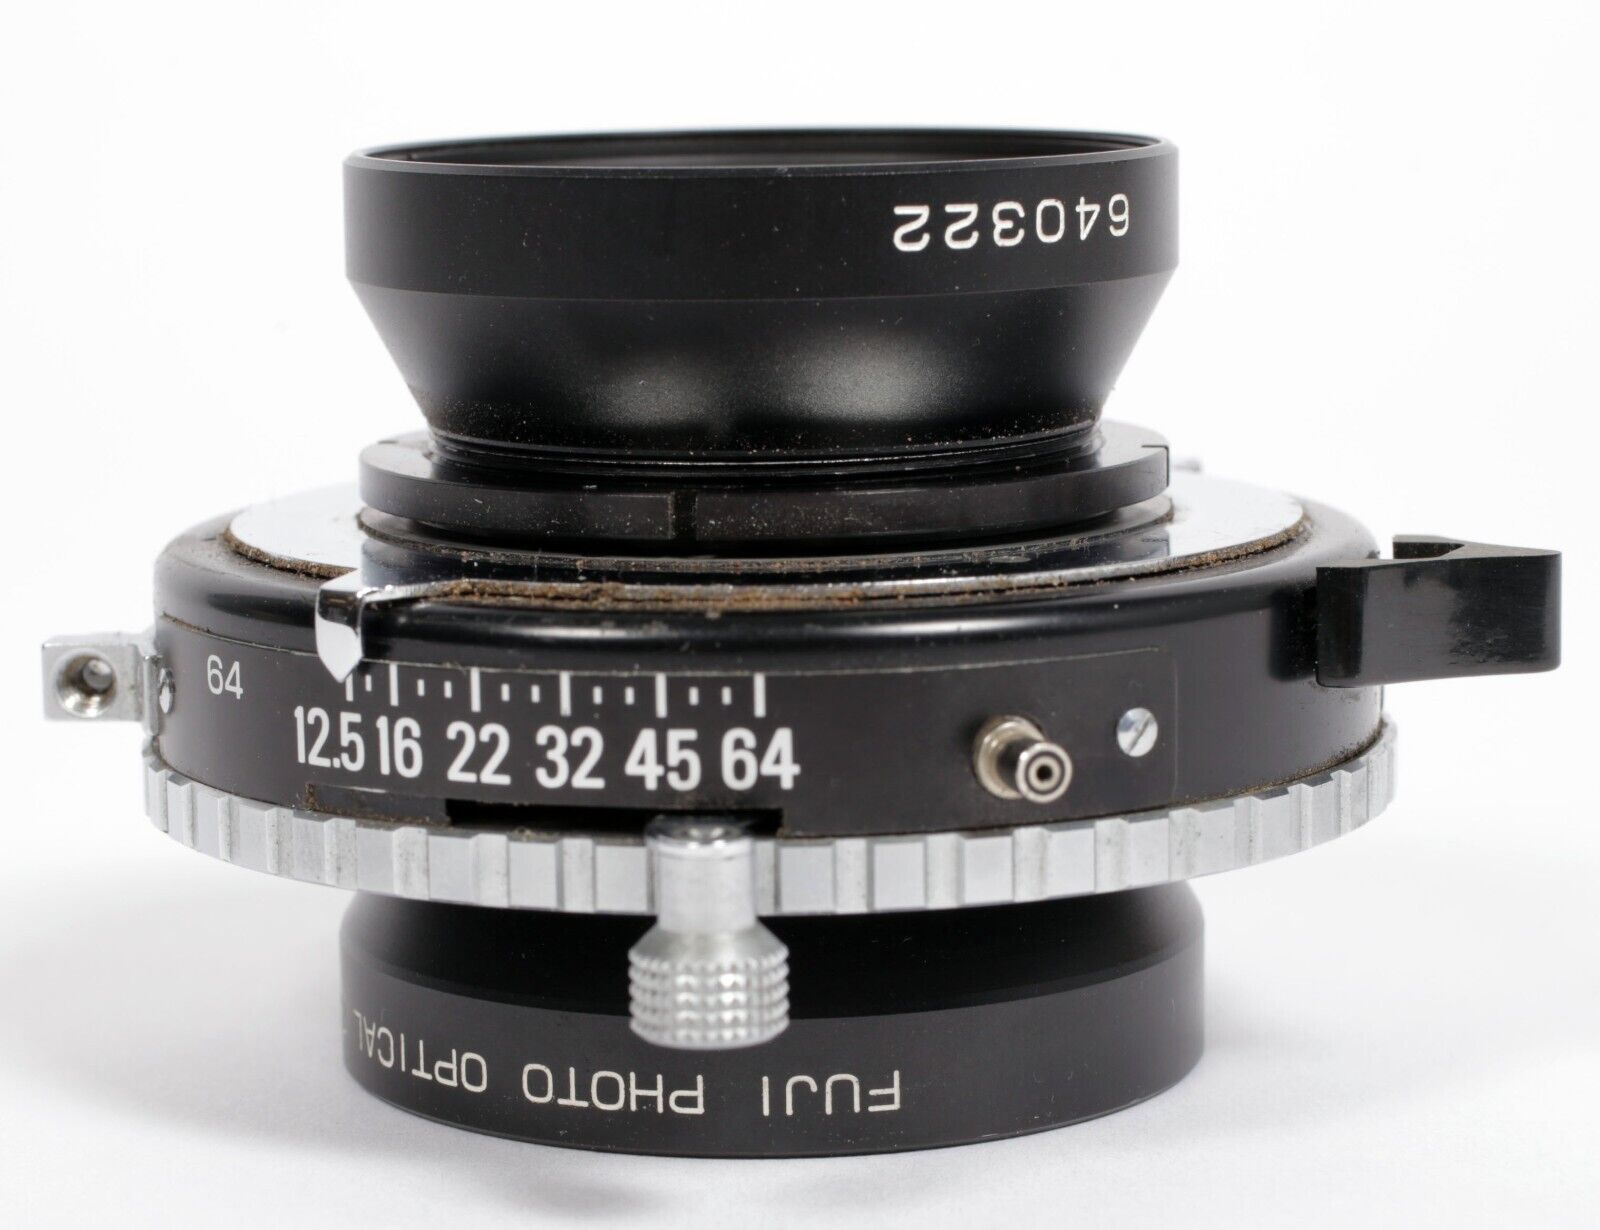 Fuji Fujinon C 450mm F12.5 lens in Copal #1 shutter #322